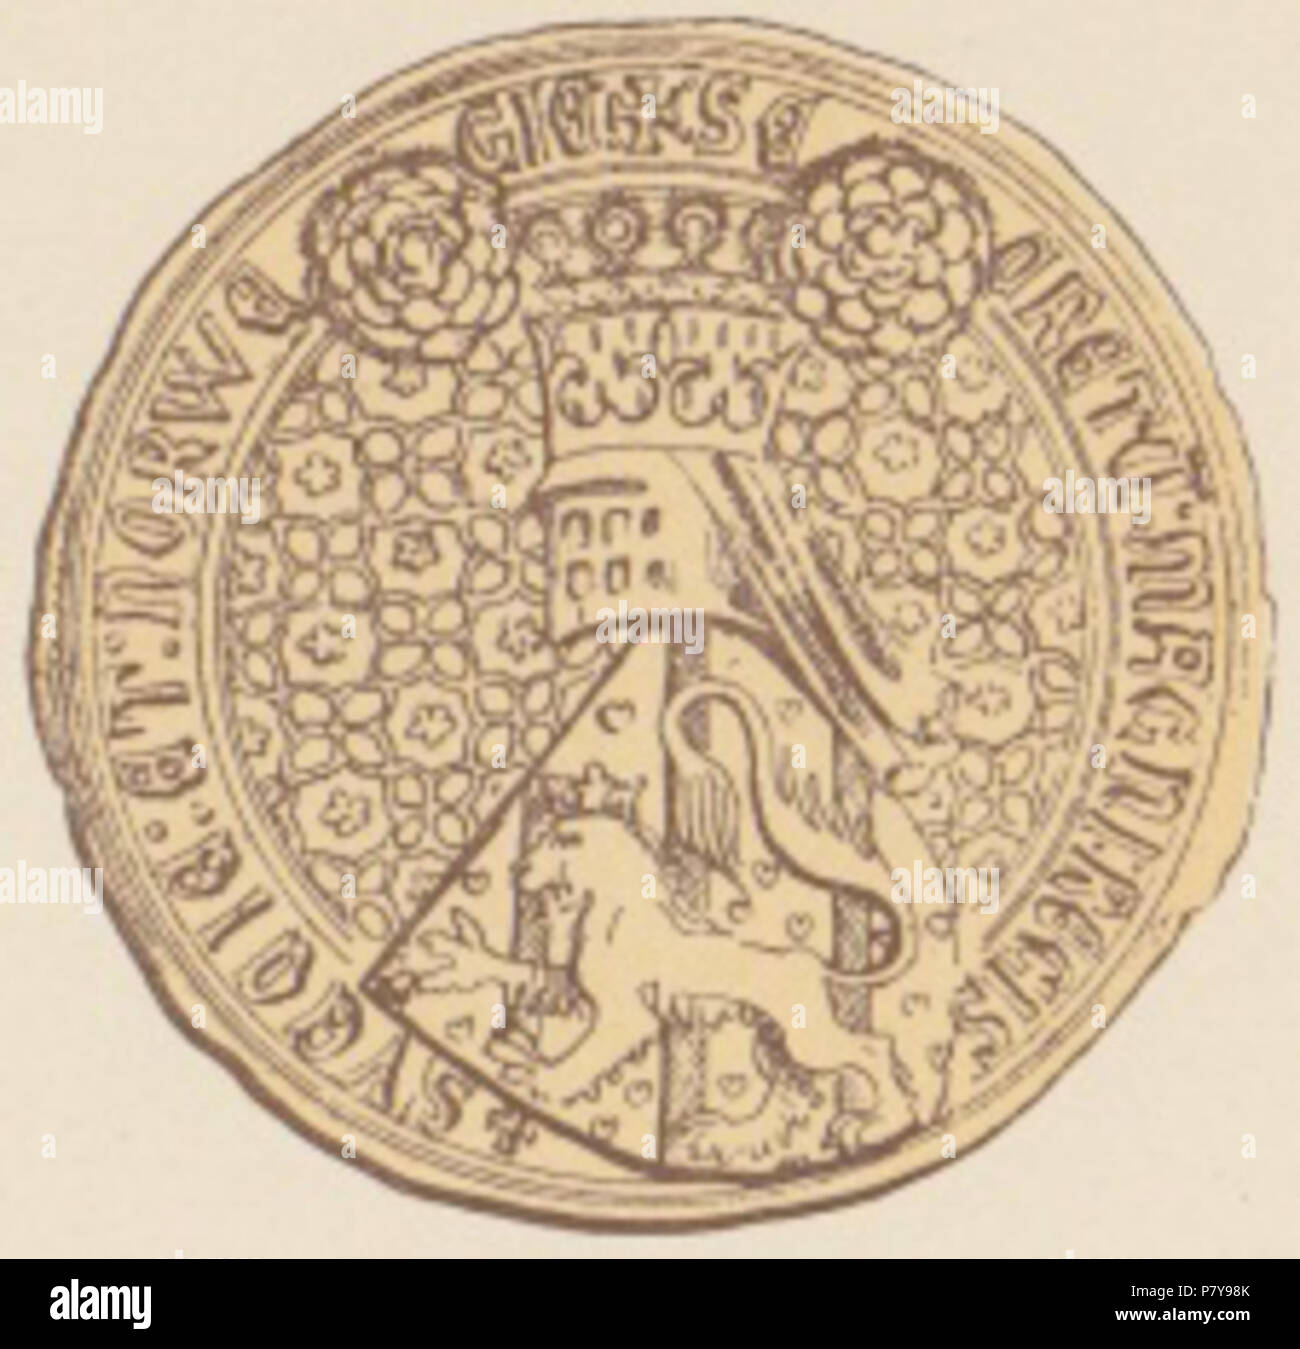 English: Seal of King Magnus VII of Norway/Magnus IV of Sweden, based on 28 documents, dated 1341–72. Text: ' SECRETUm : MAGNI : REGIS :  SVECIE : ET : NORWE/GIE'. Size: 60 mm. 4 August 2012 234 Kong Magnus Eriksson PI XVI 2 Stock Photo